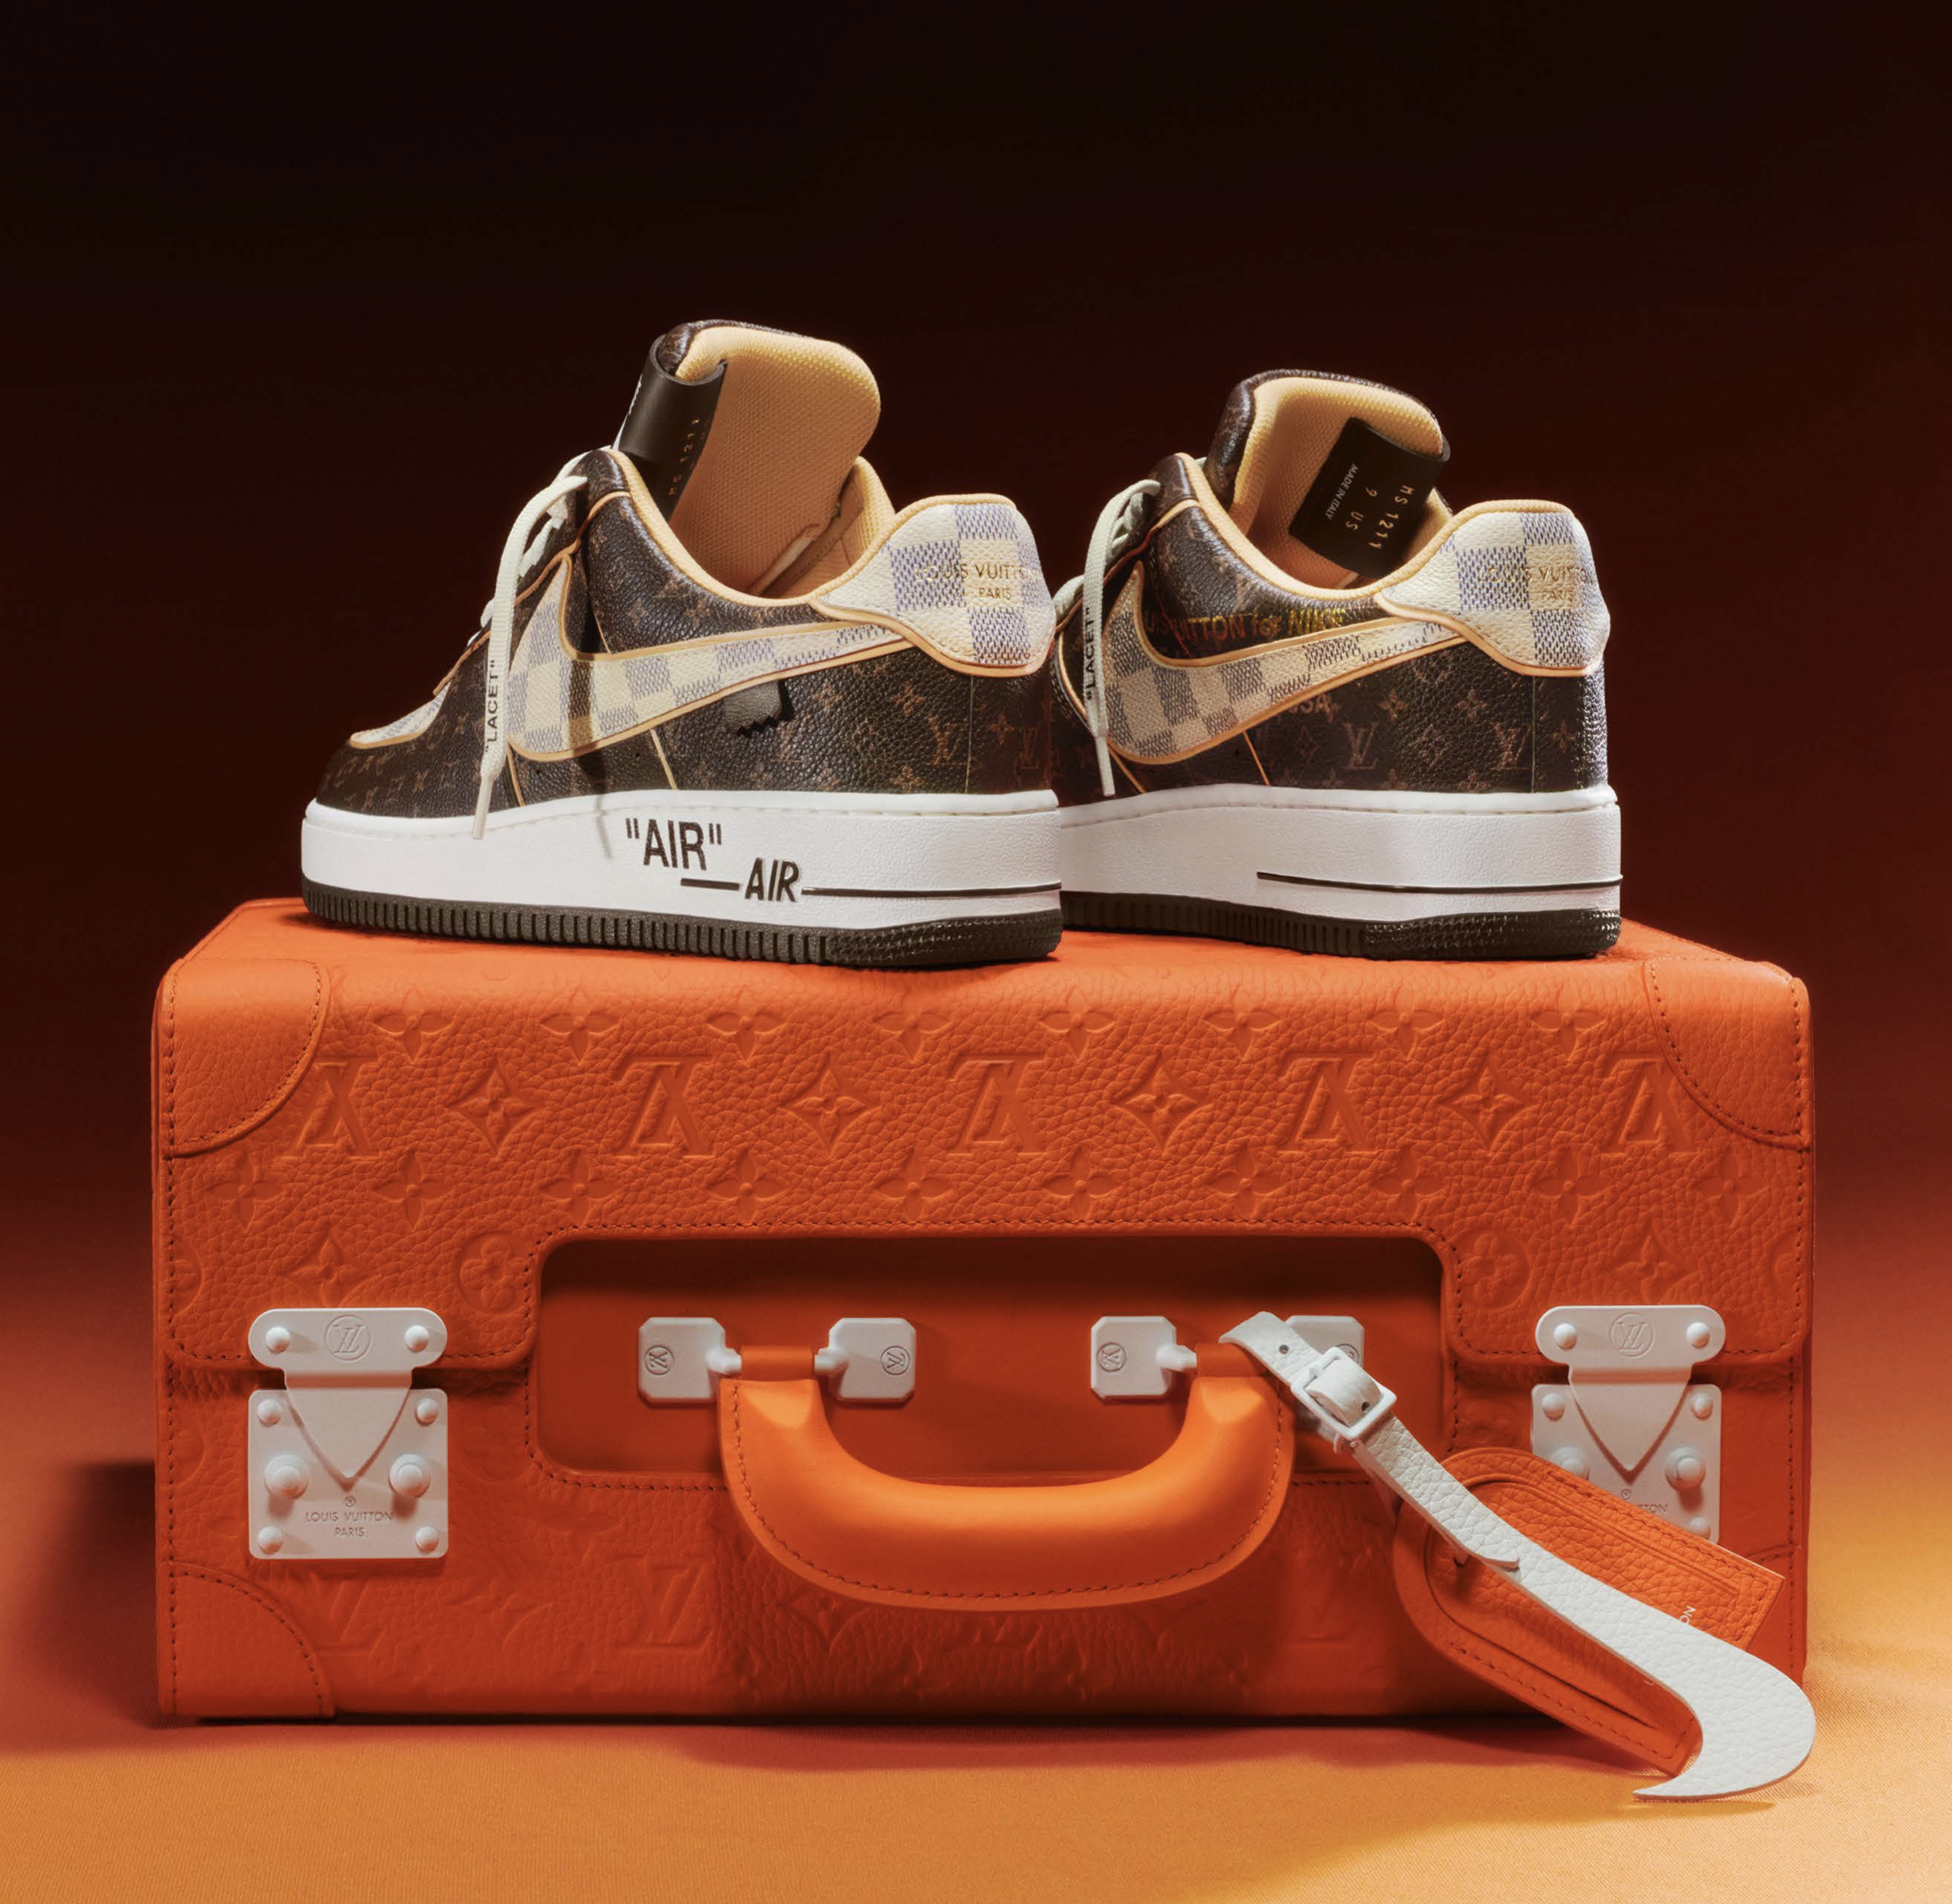 Virgil Abloh x Louis Vuitton SK8 sneakers releasing for FW22. ✨